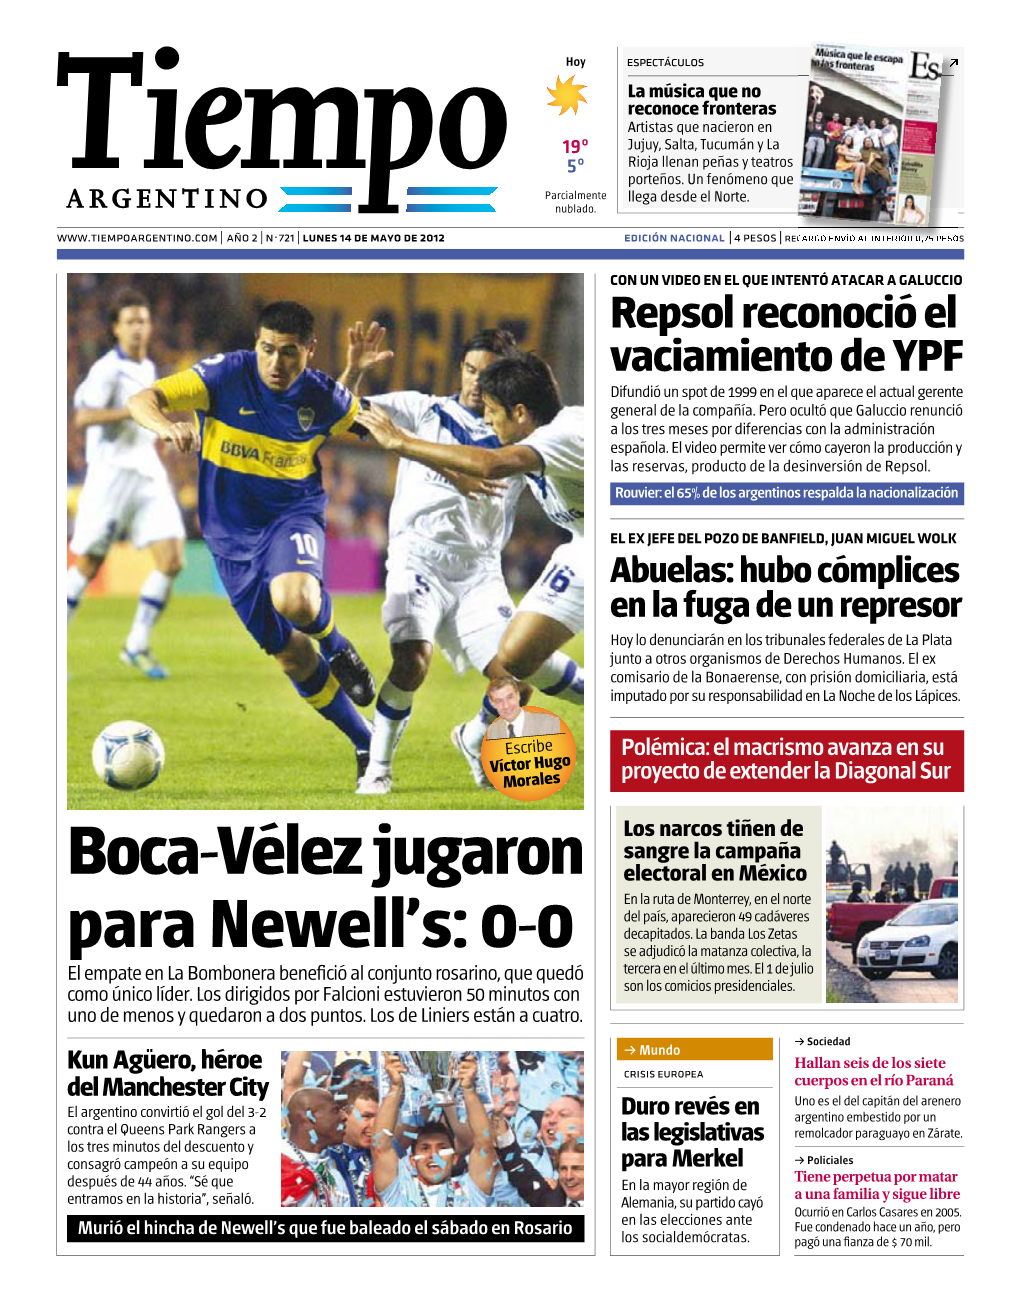 Boca-Vélez Jugaron Para Newell's